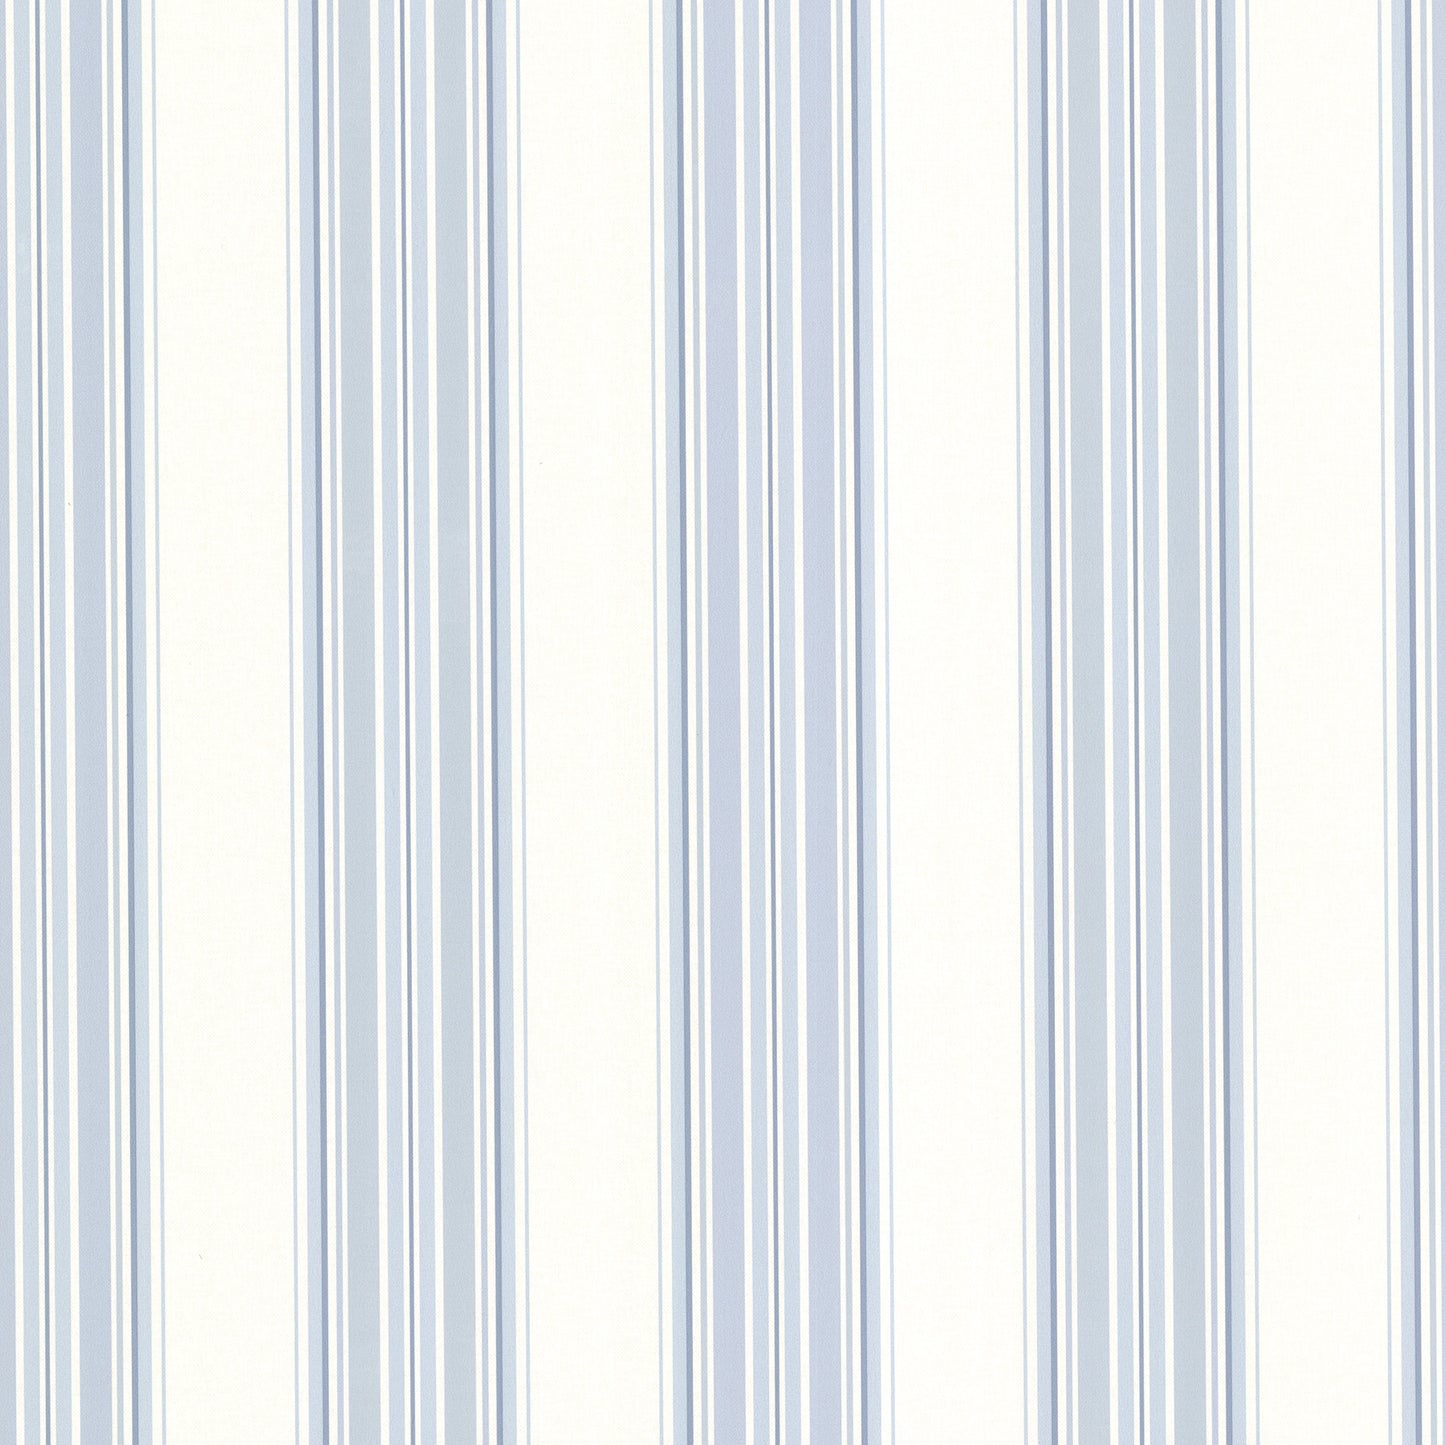 Order 2718-66811 Texture Trends II Clancy Brewster Wallpaper